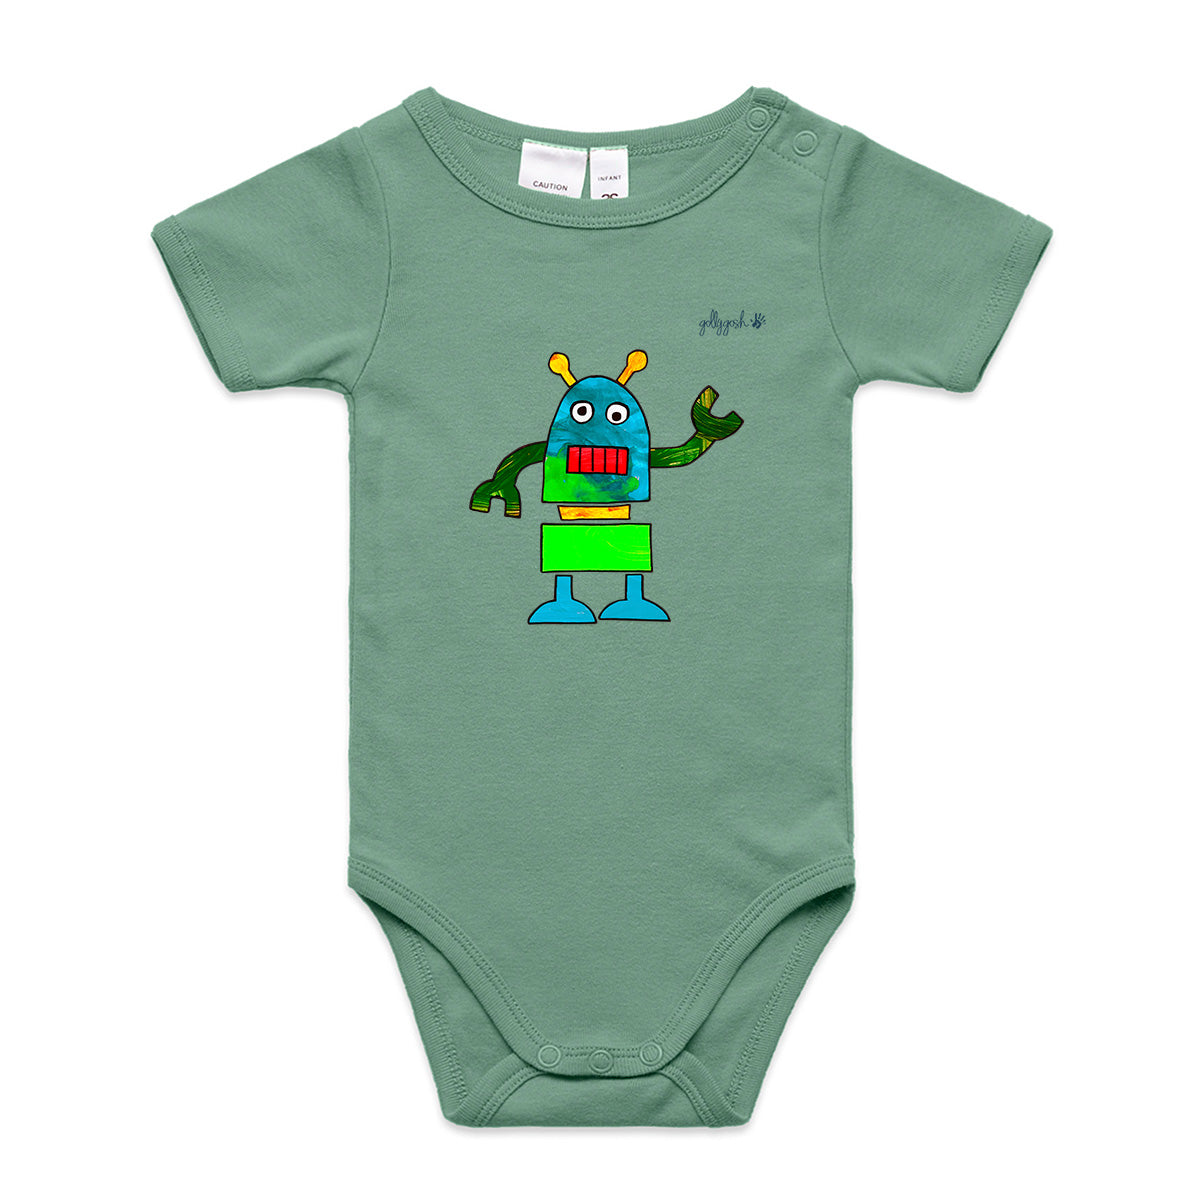 Robot - Infant Baby Grow